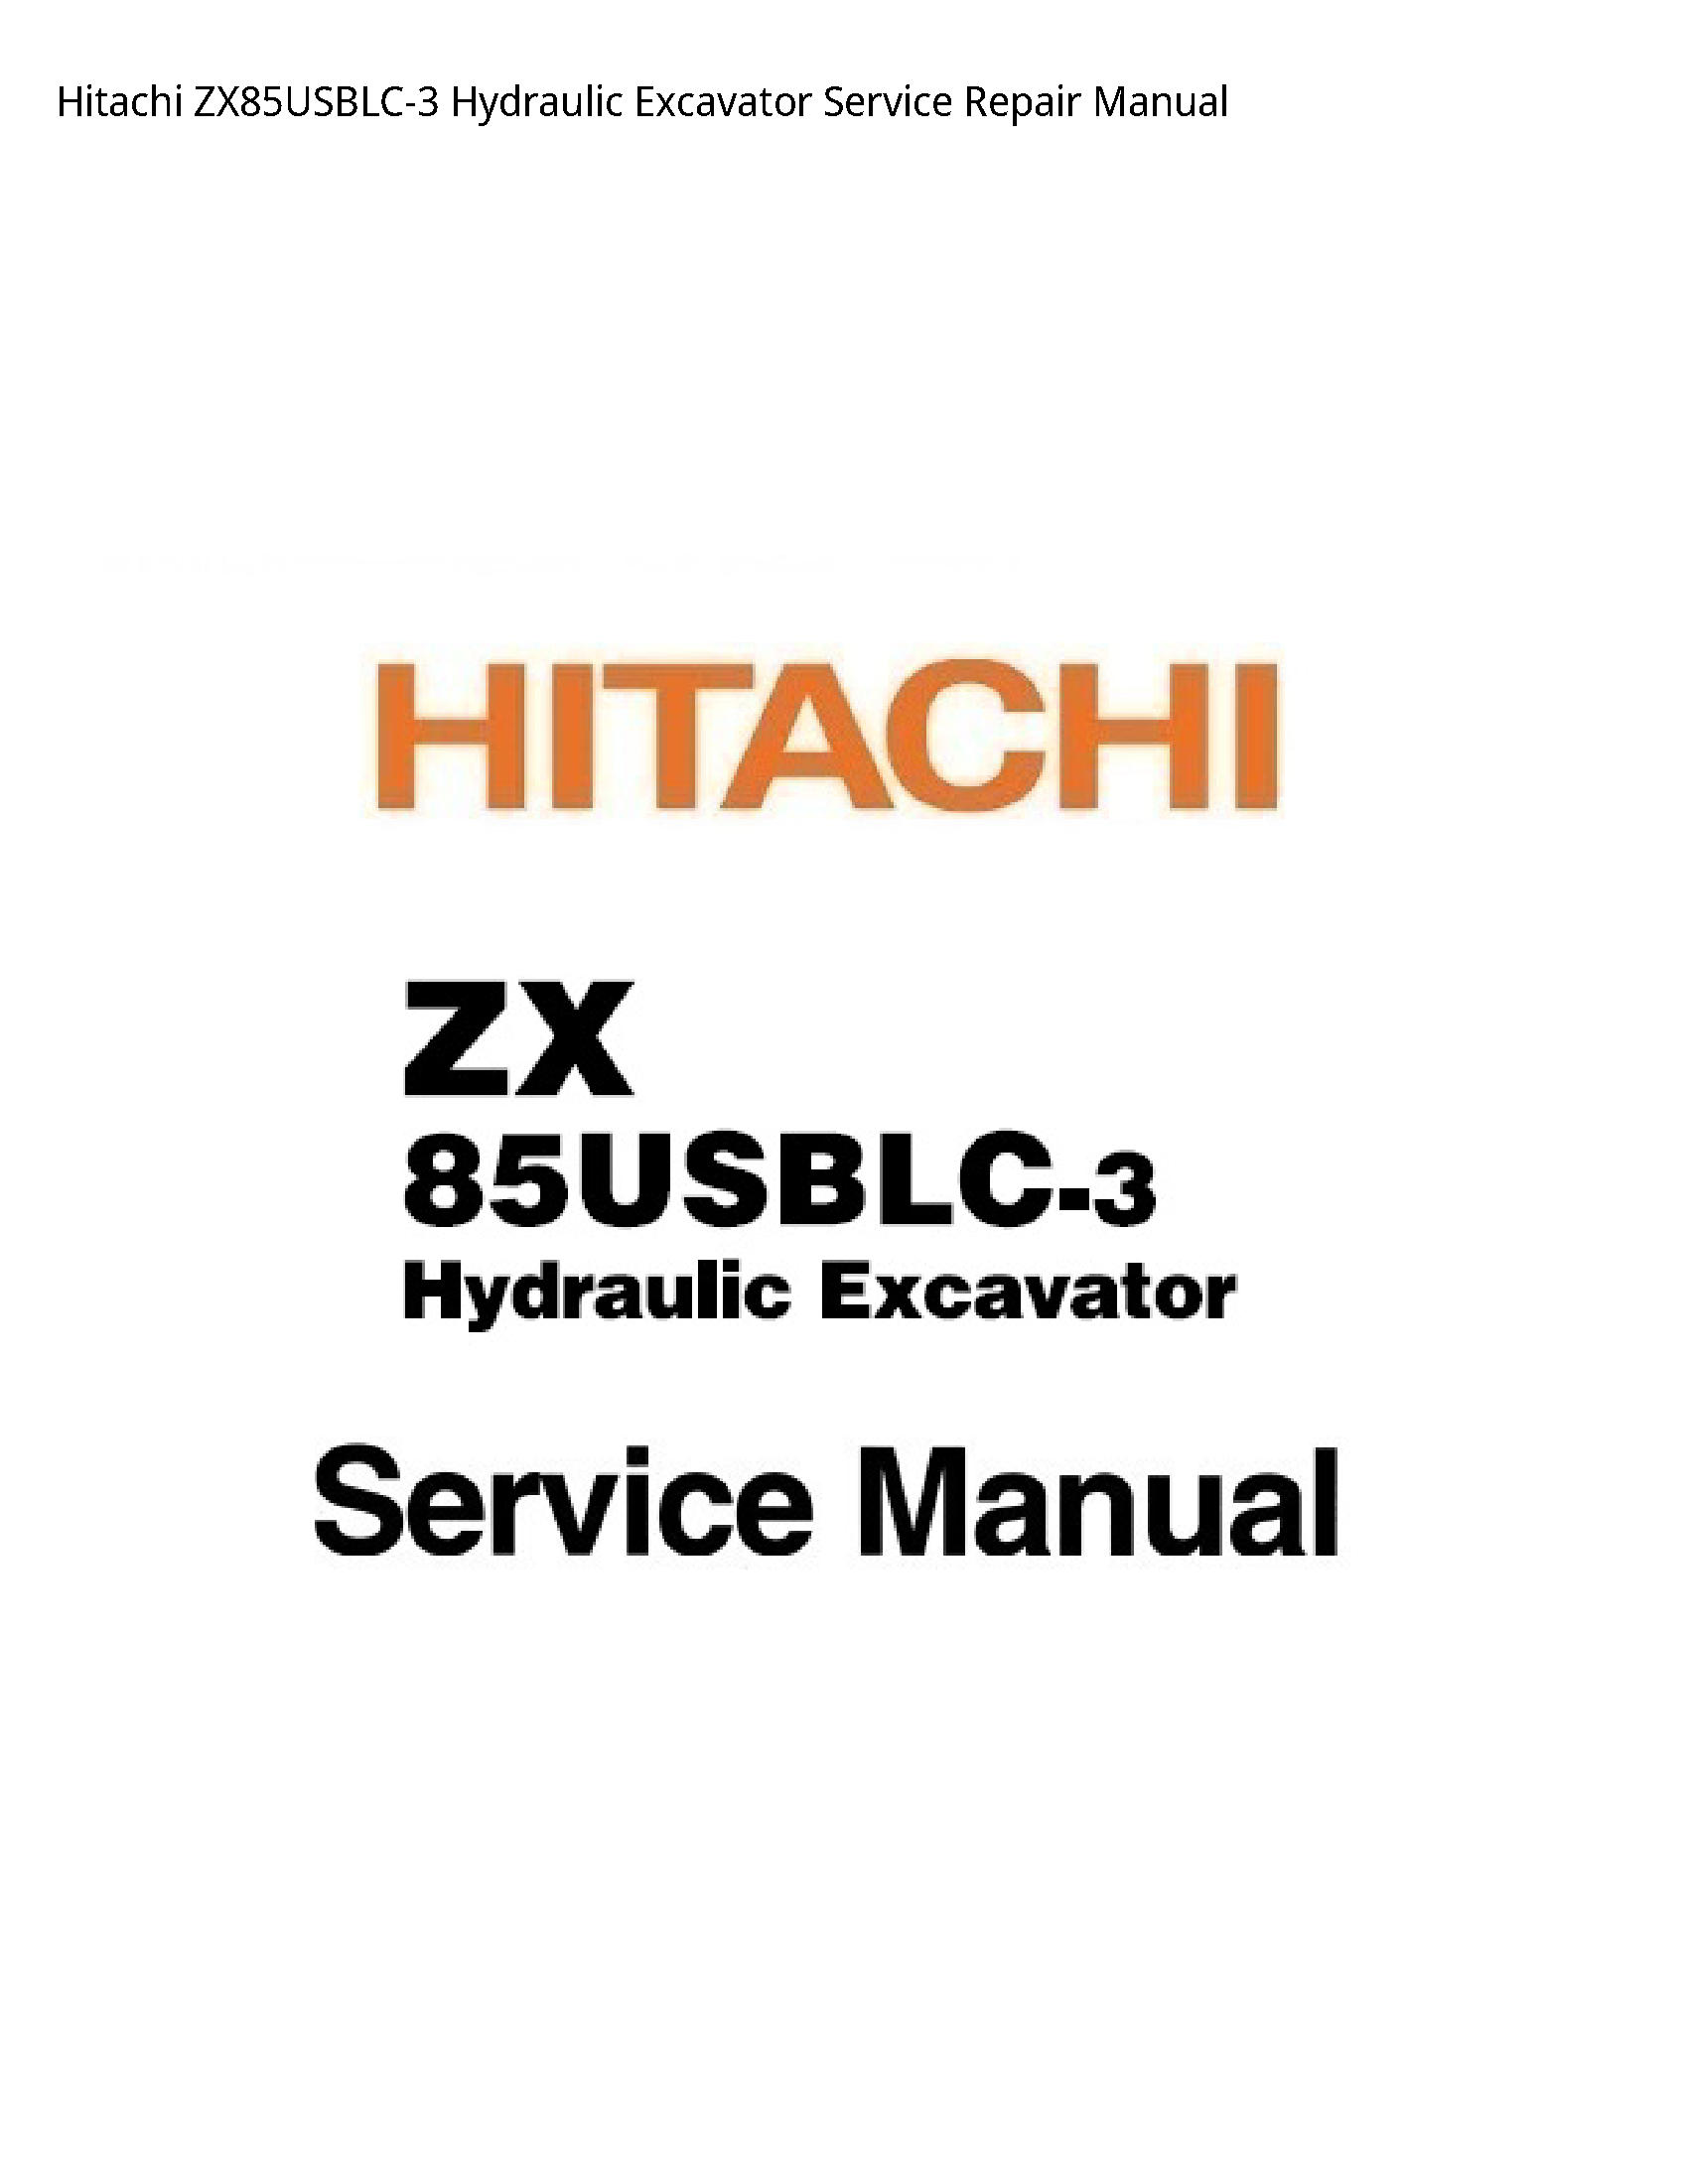 Hitachi ZX85USBLC-3 Hydraulic Excavator manual